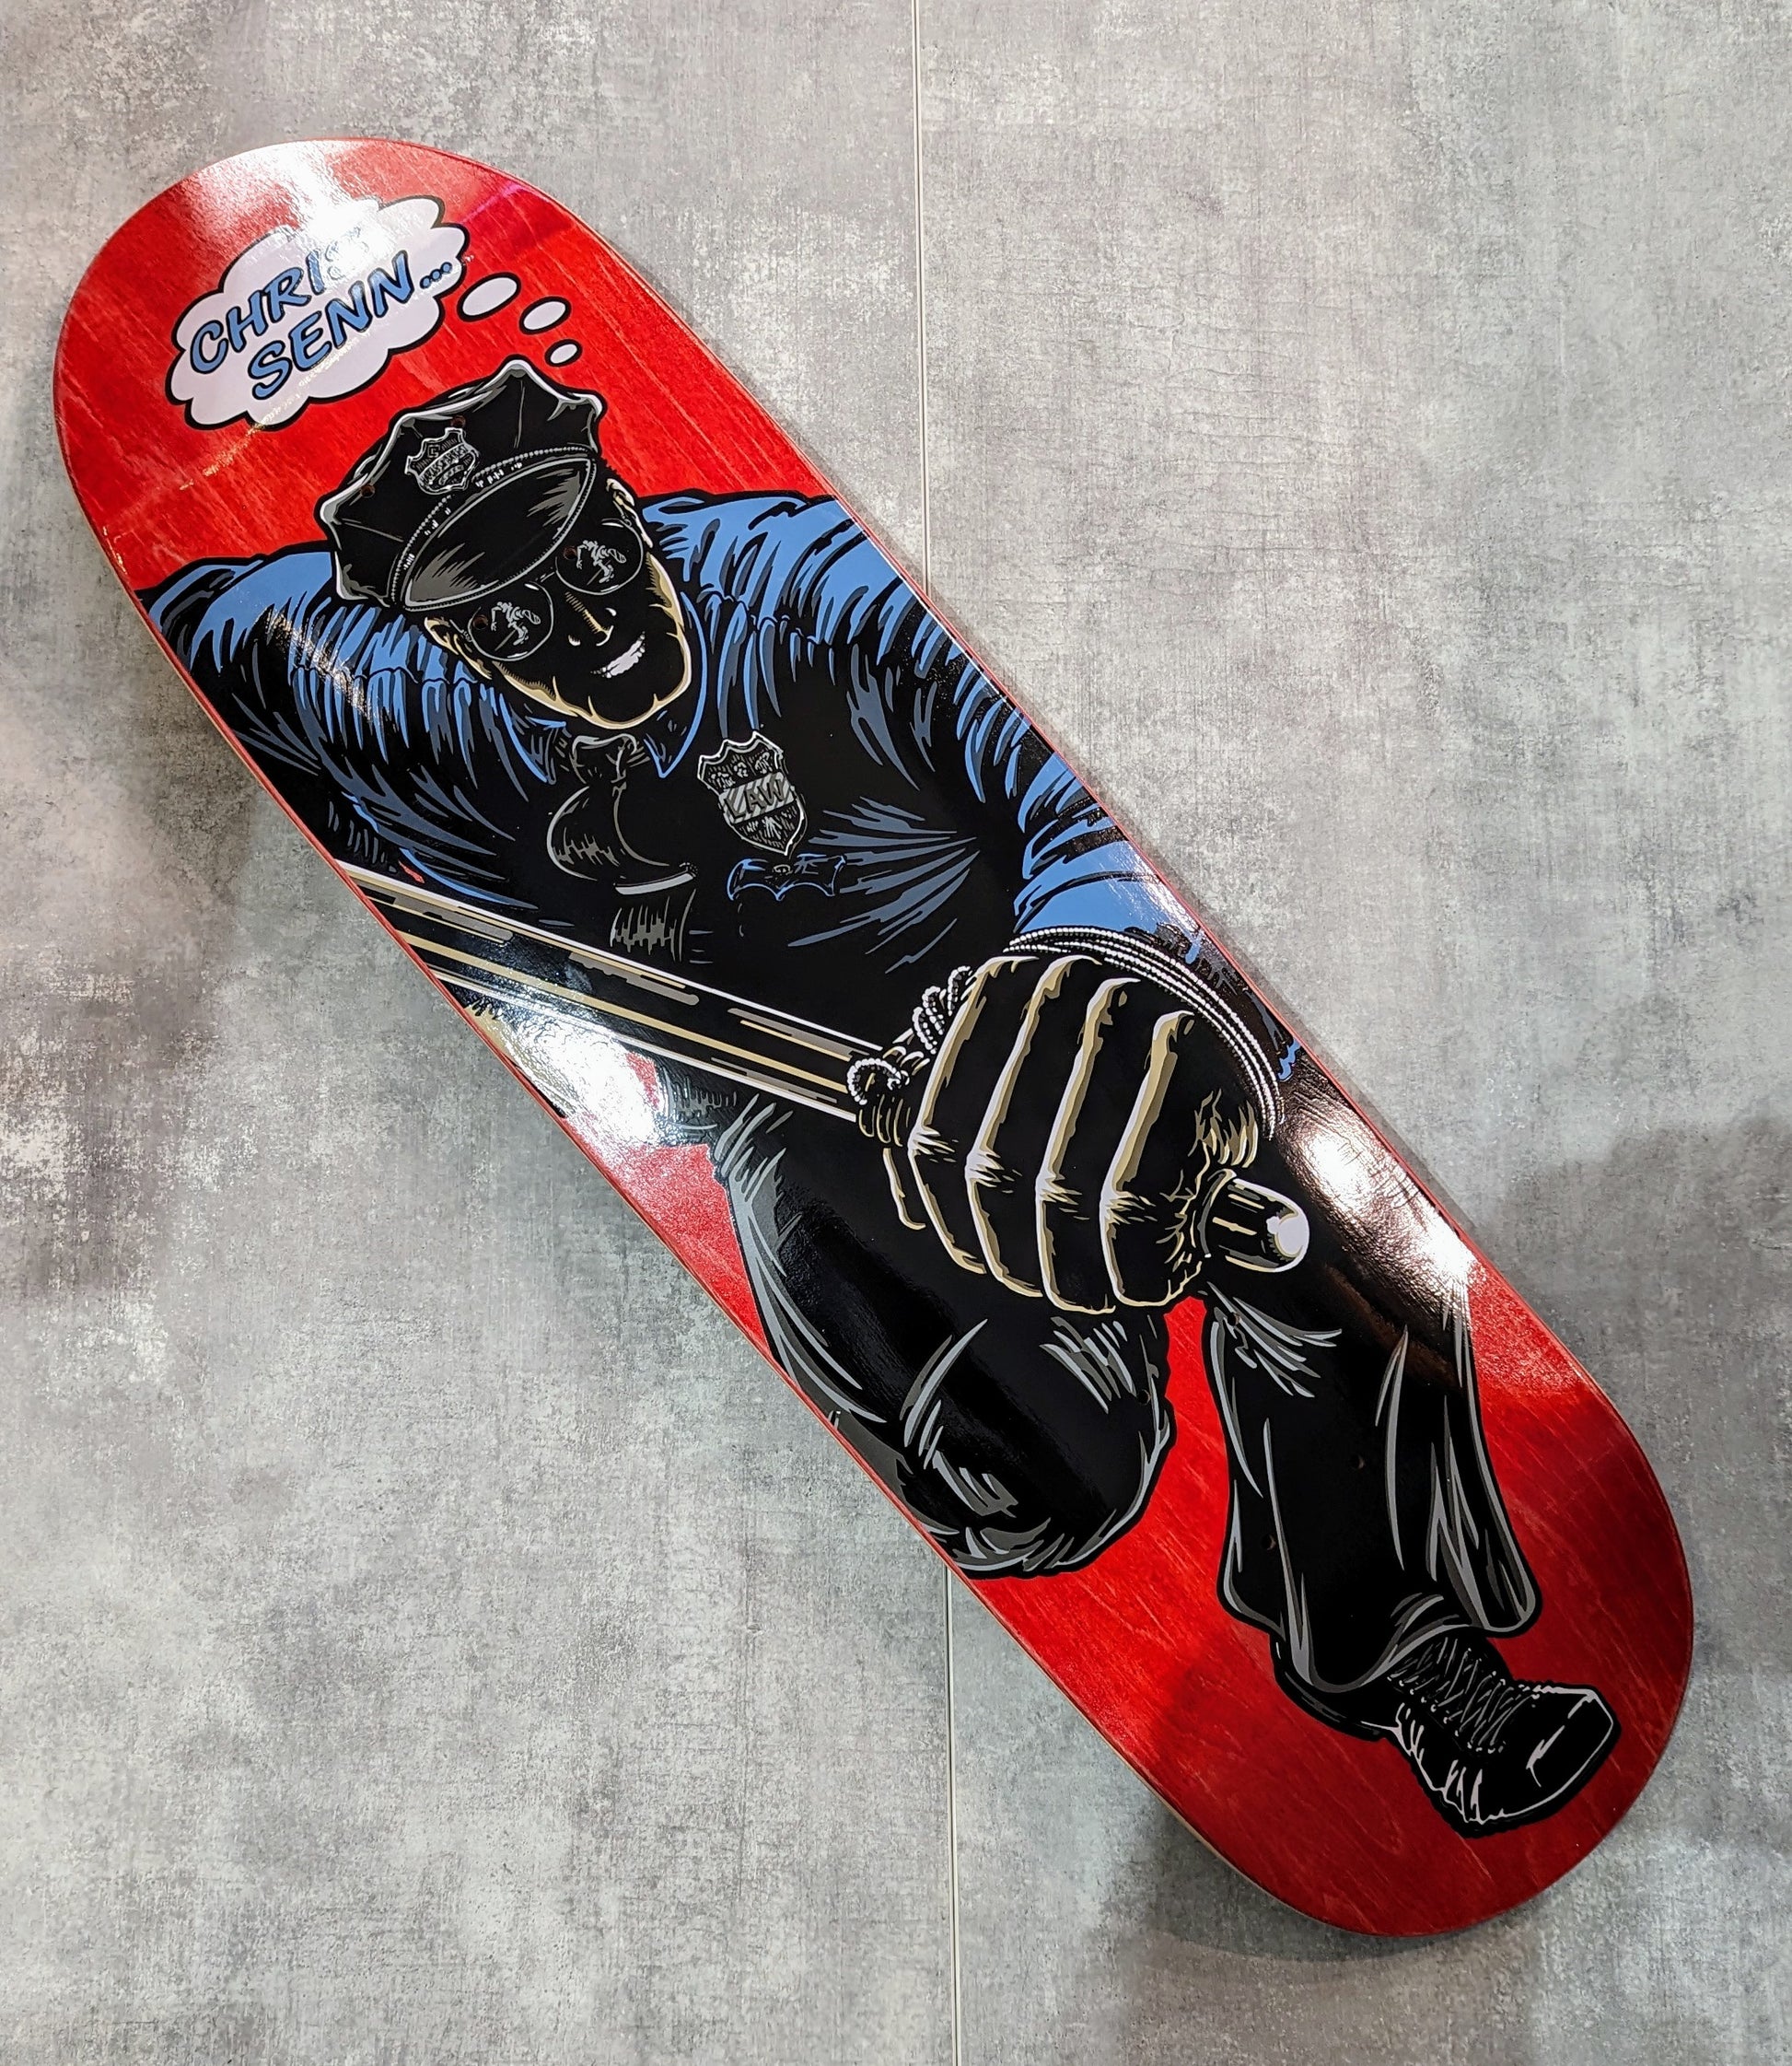 Powell Peralta Chris Senn Cop Old School Reissue Skateboard Deck